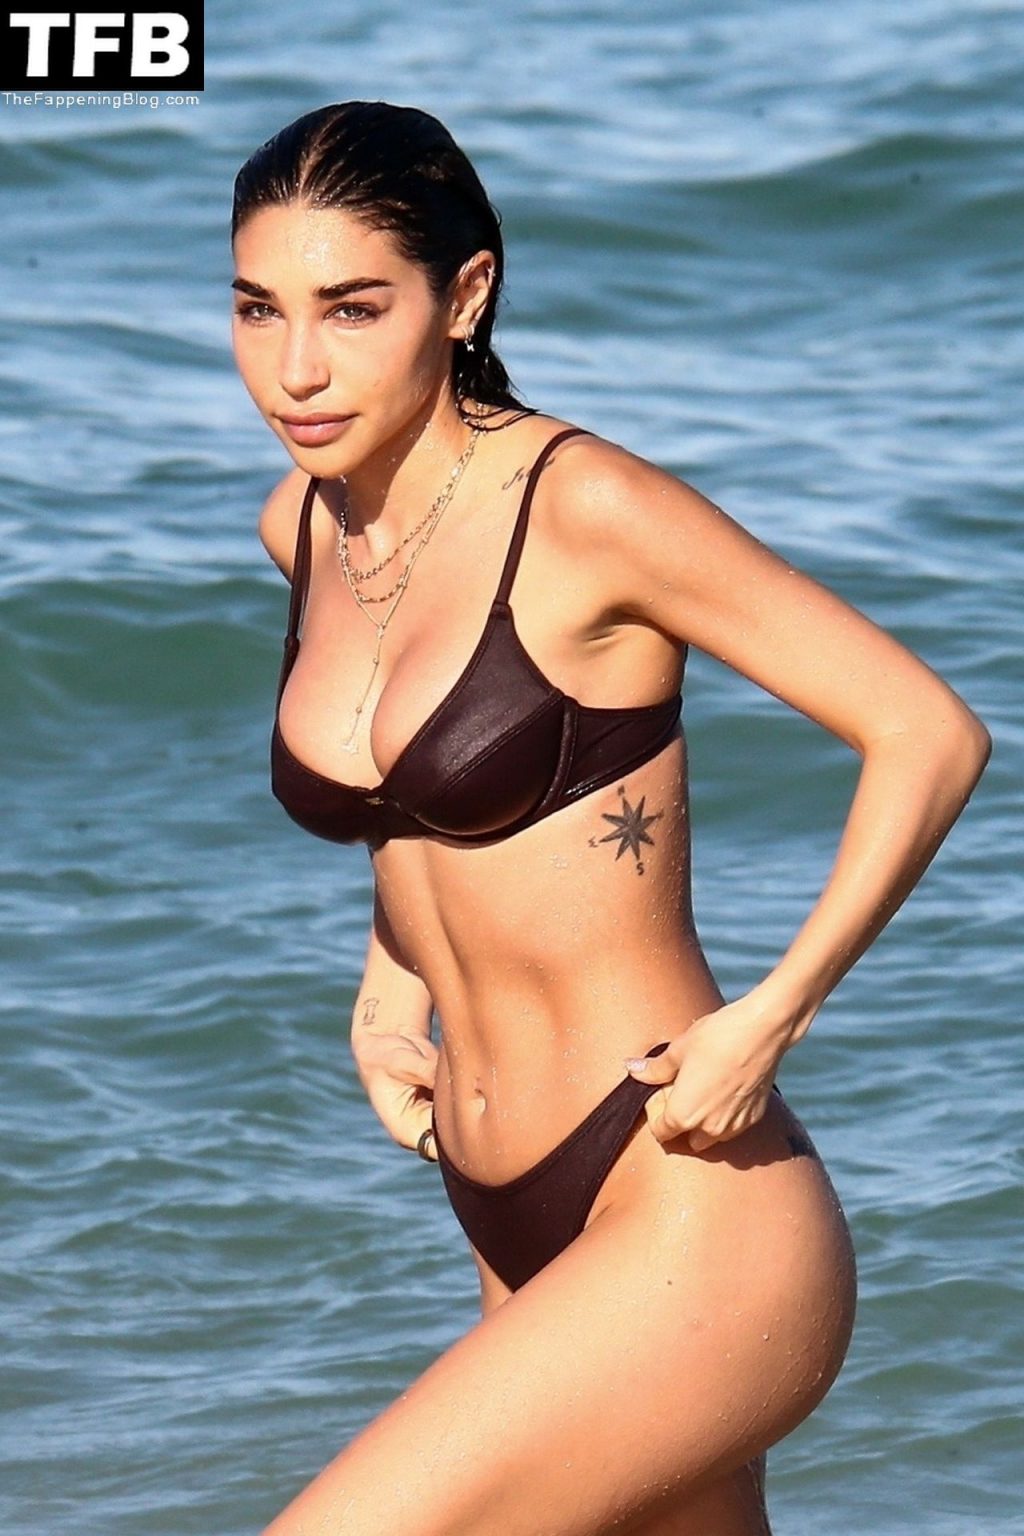 Chantel Jeffries Looks Stunning in a Tiny Bikini on the Beach in Miami (43 Photos)